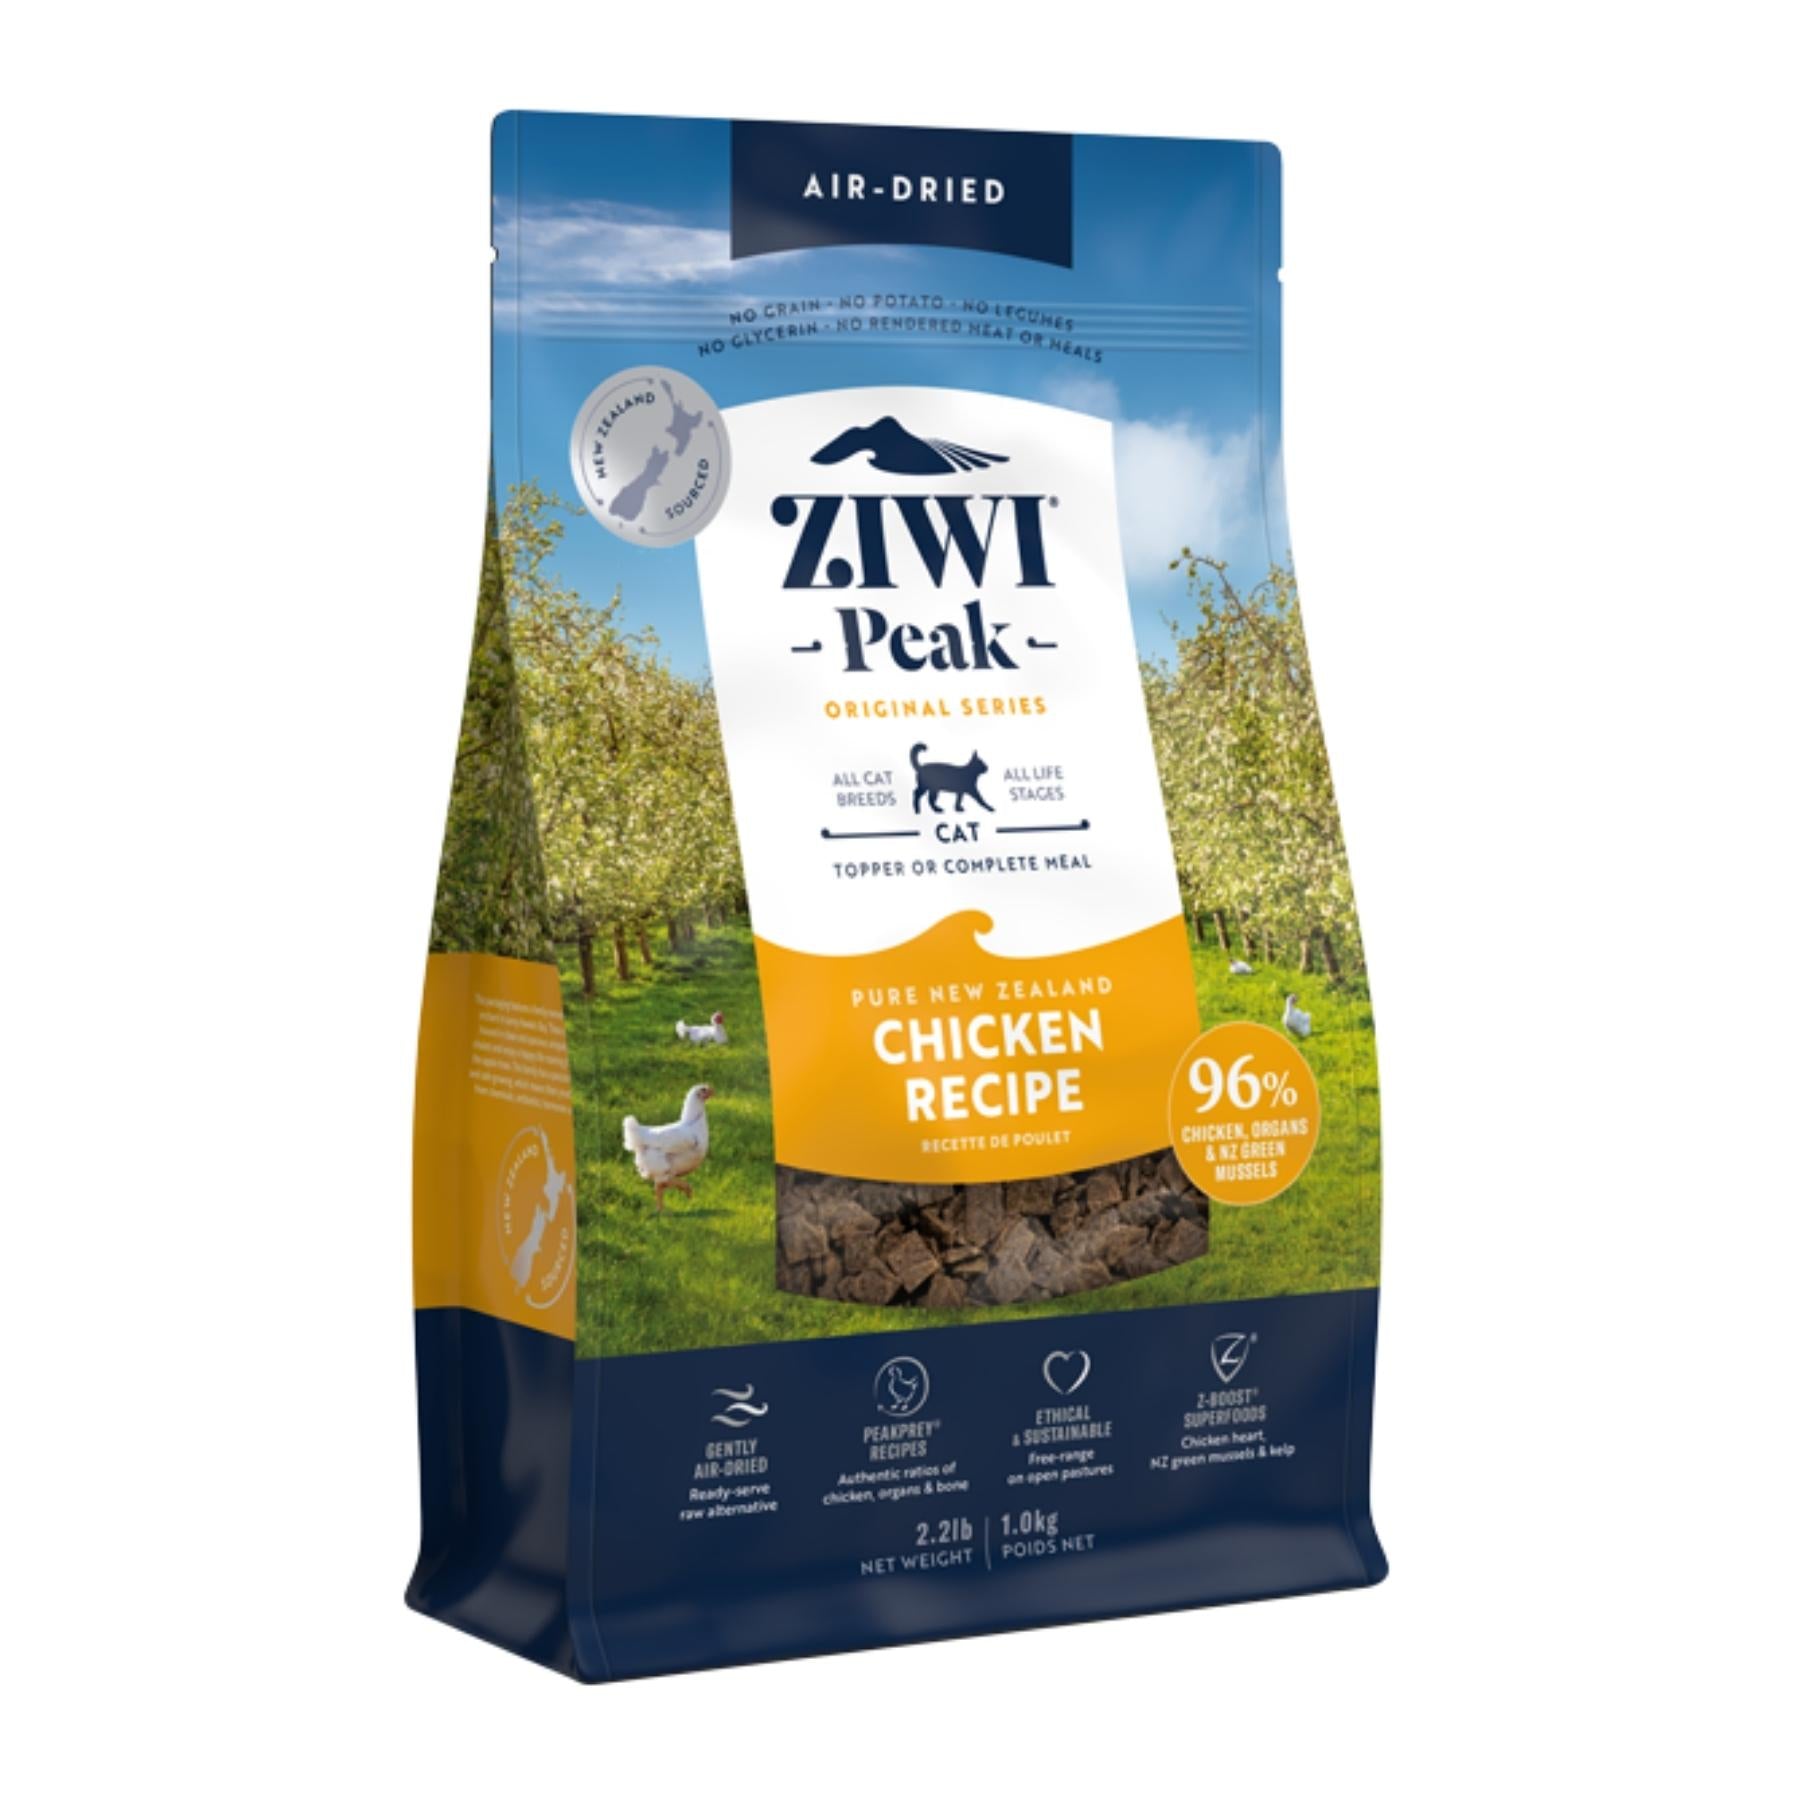 ZIWI Peak Dry Cat Food Chicken Recipe 1kg bag - front view.